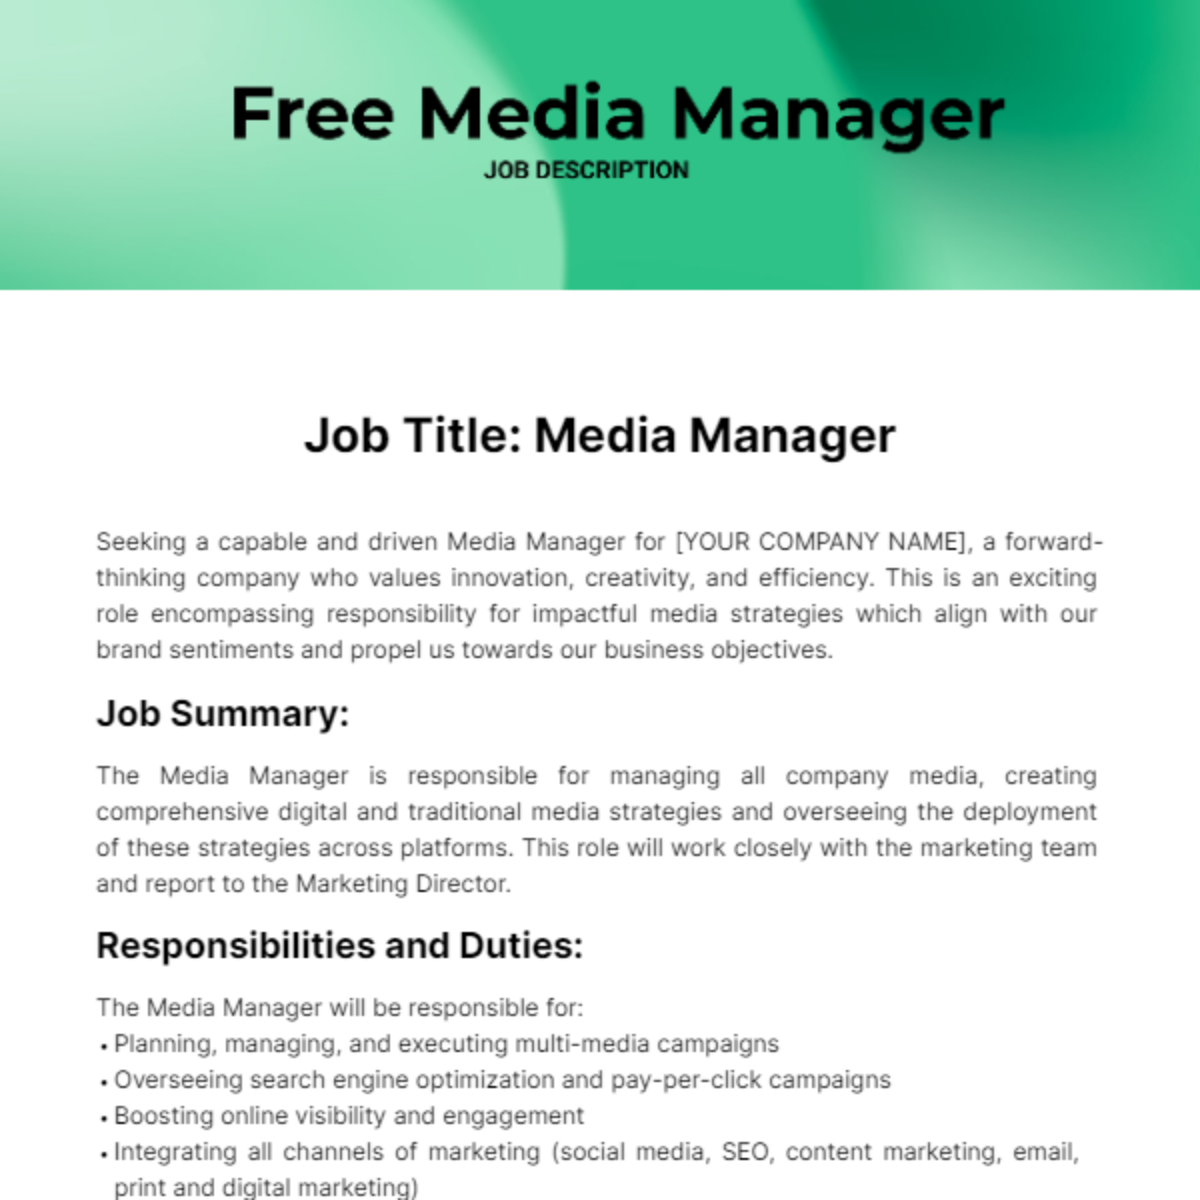 Free Media Manager Job Description Template